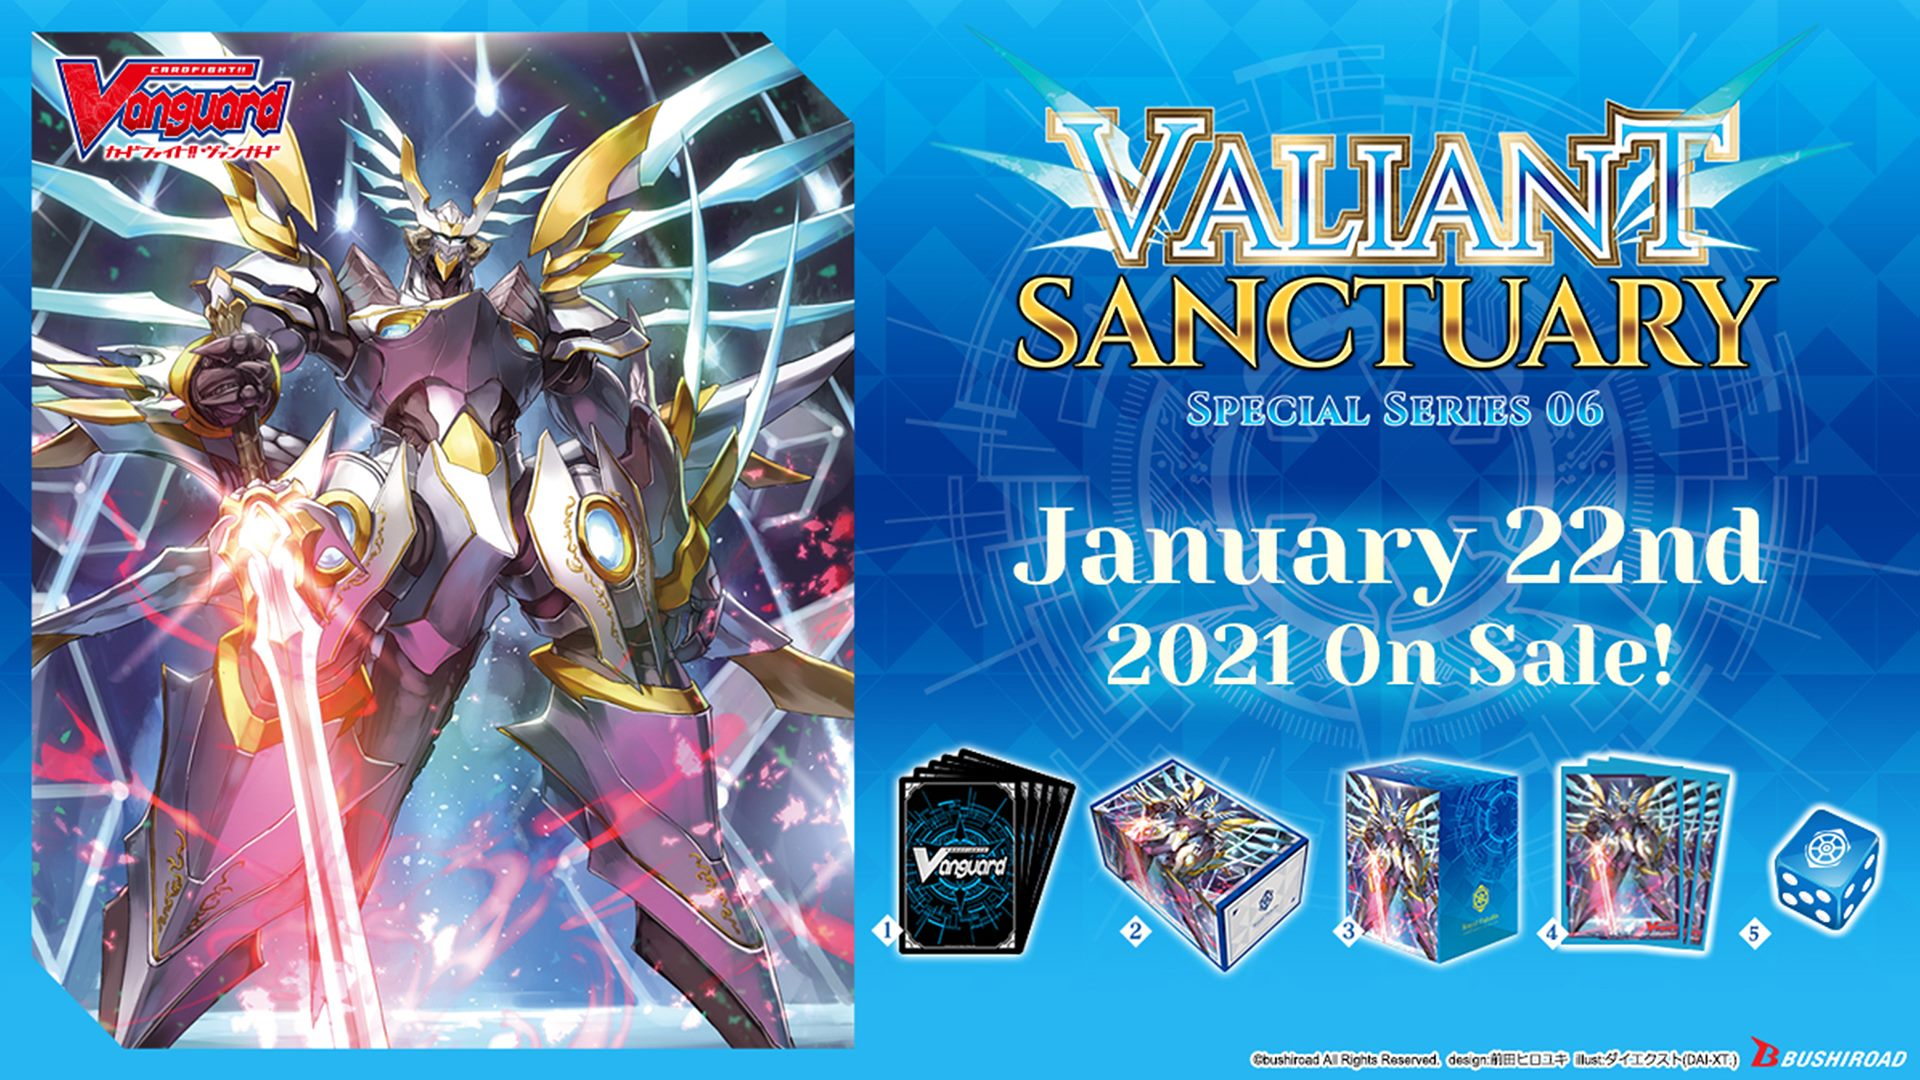 Vanguard Special Series Valiant Sanctuary Special Expansion Set V 